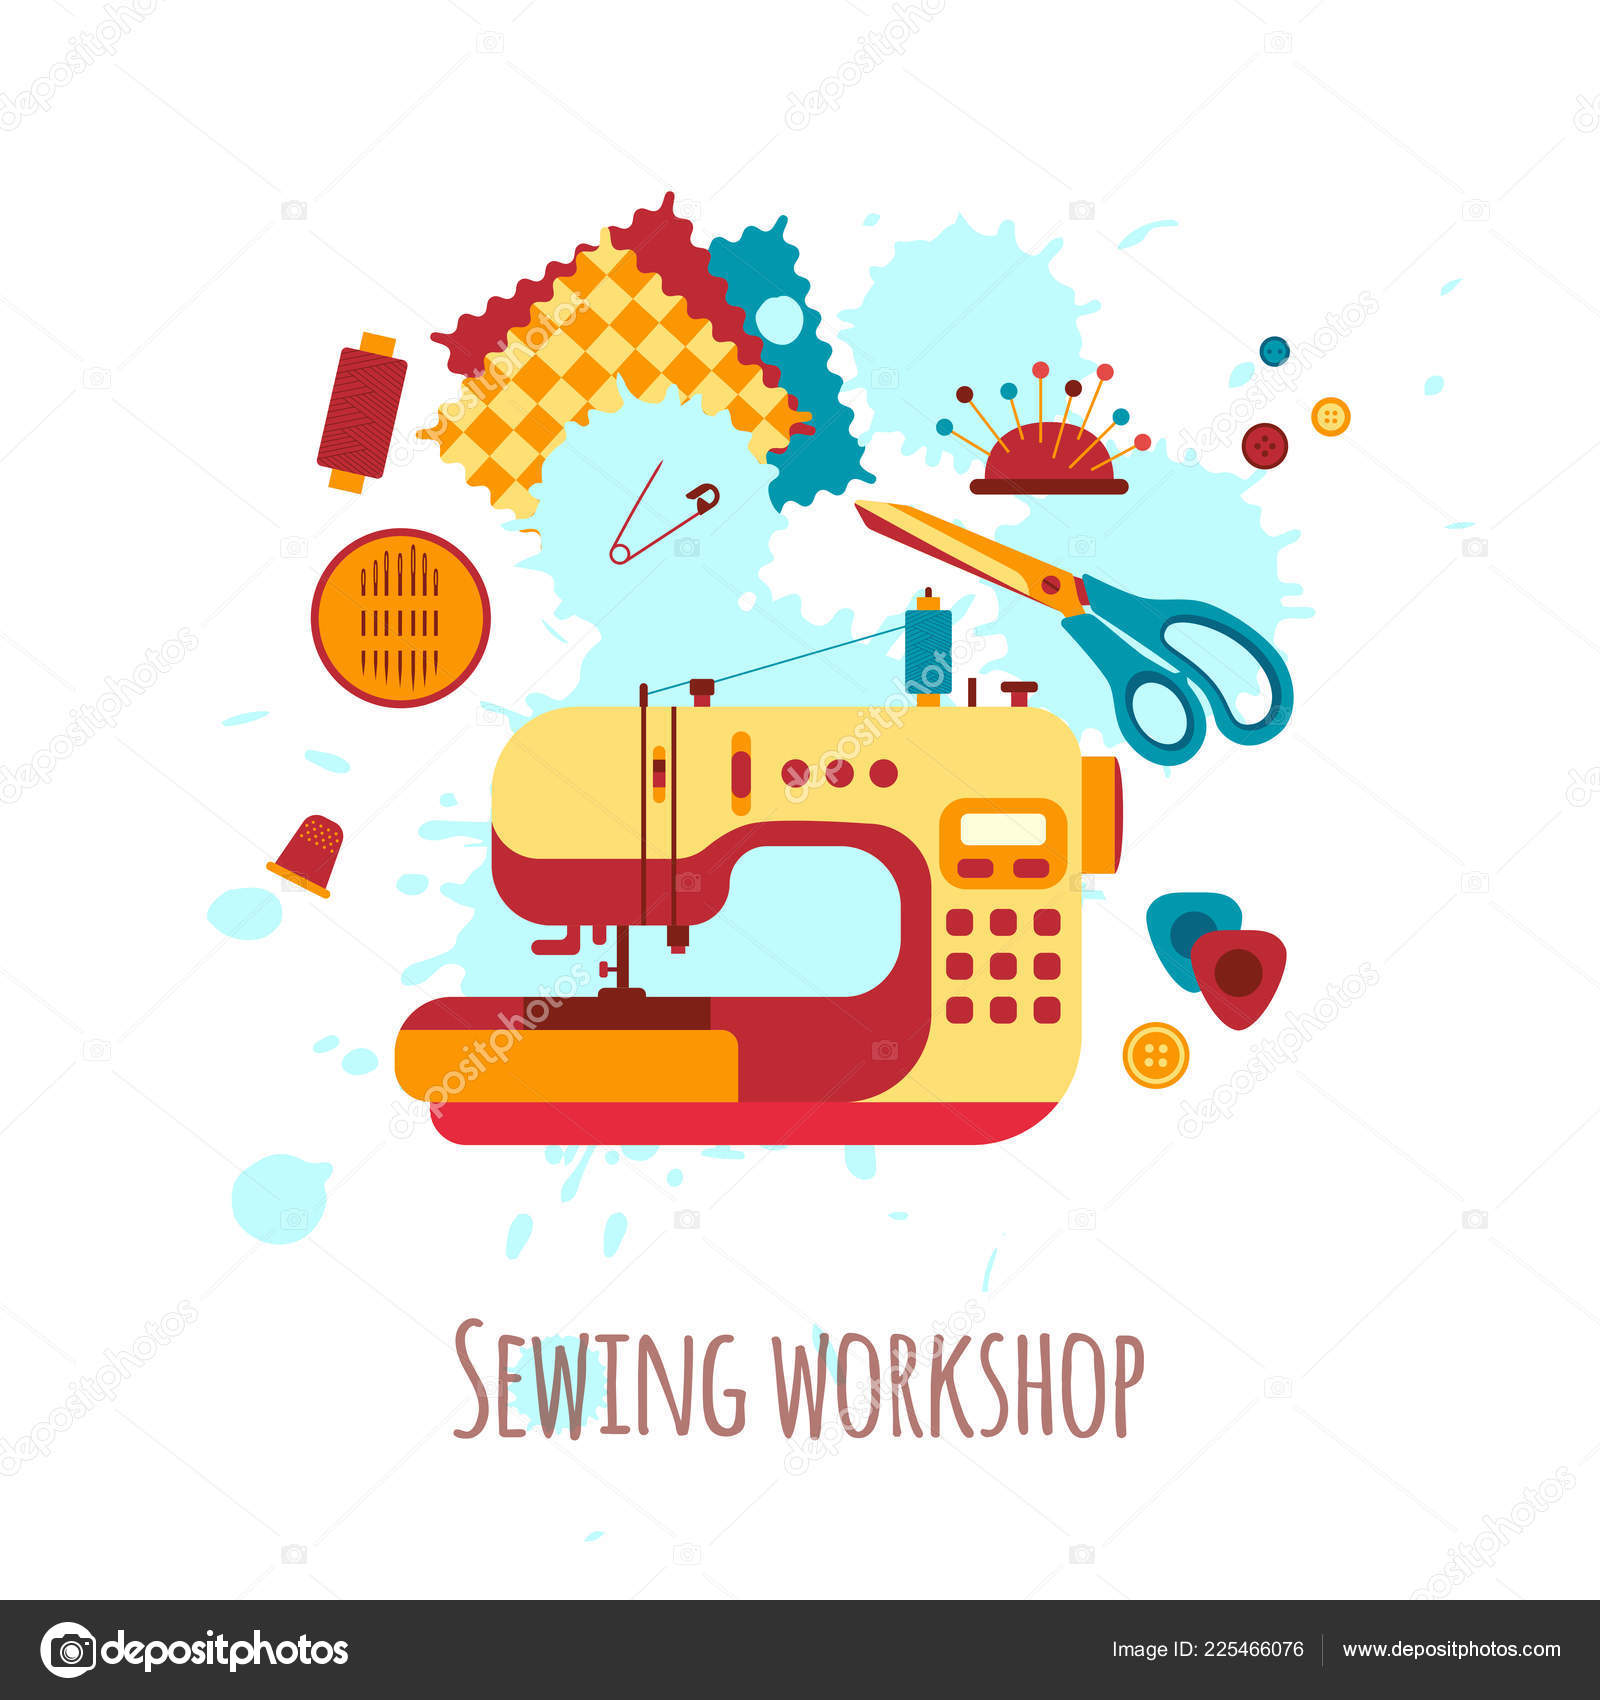 https://st4.depositphotos.com/3474627/22546/v/1600/depositphotos_225466076-stock-illustration-sewing-equipment-tool-colorful-cartoon.jpg